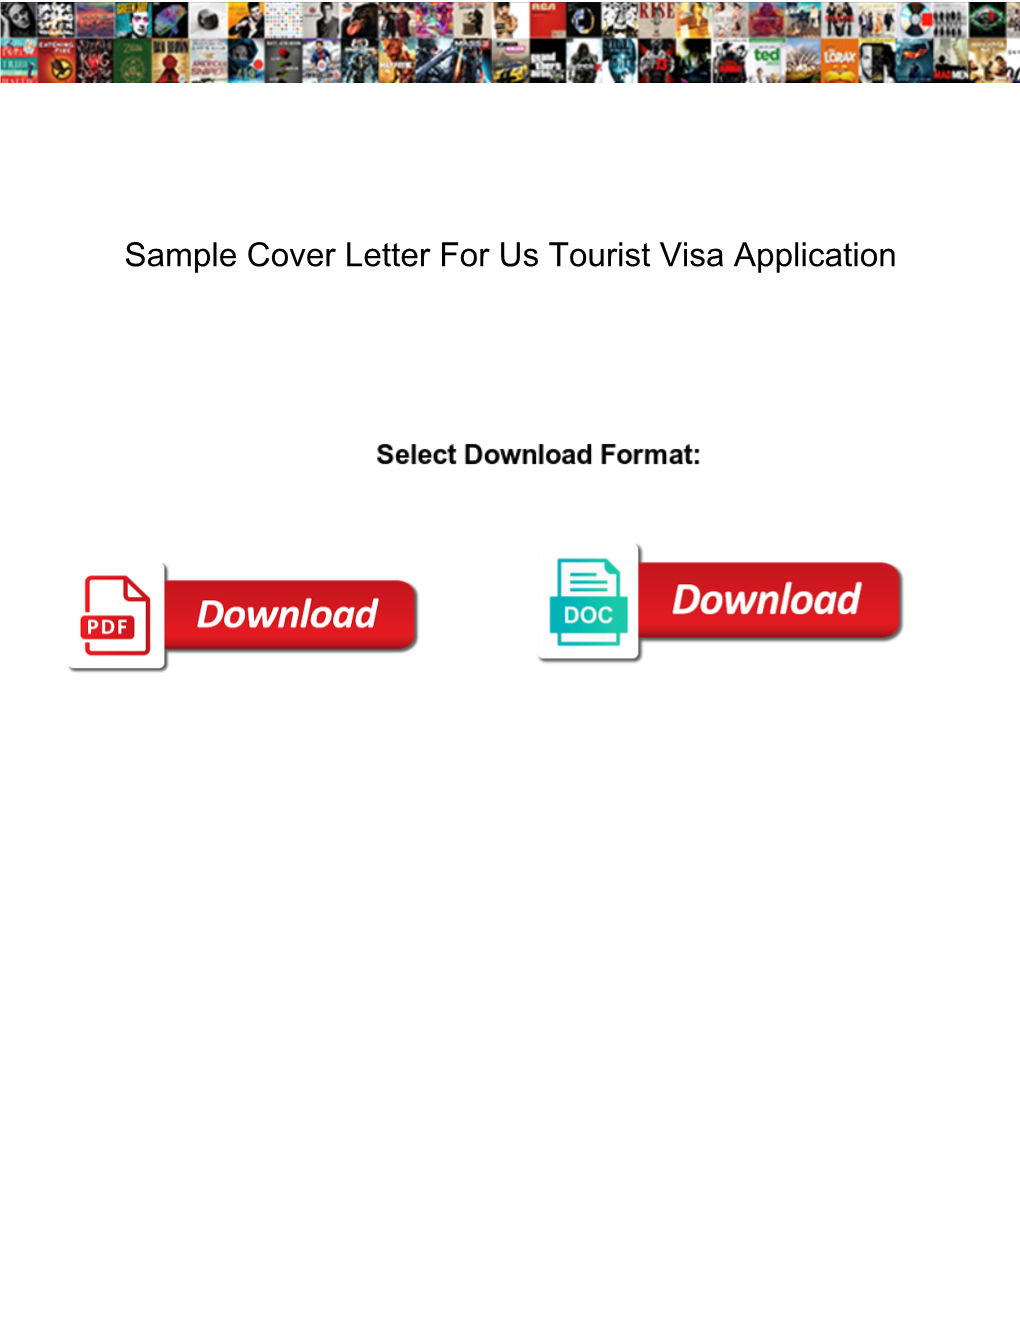 Sample Cover Letter for Us Tourist Visa Application